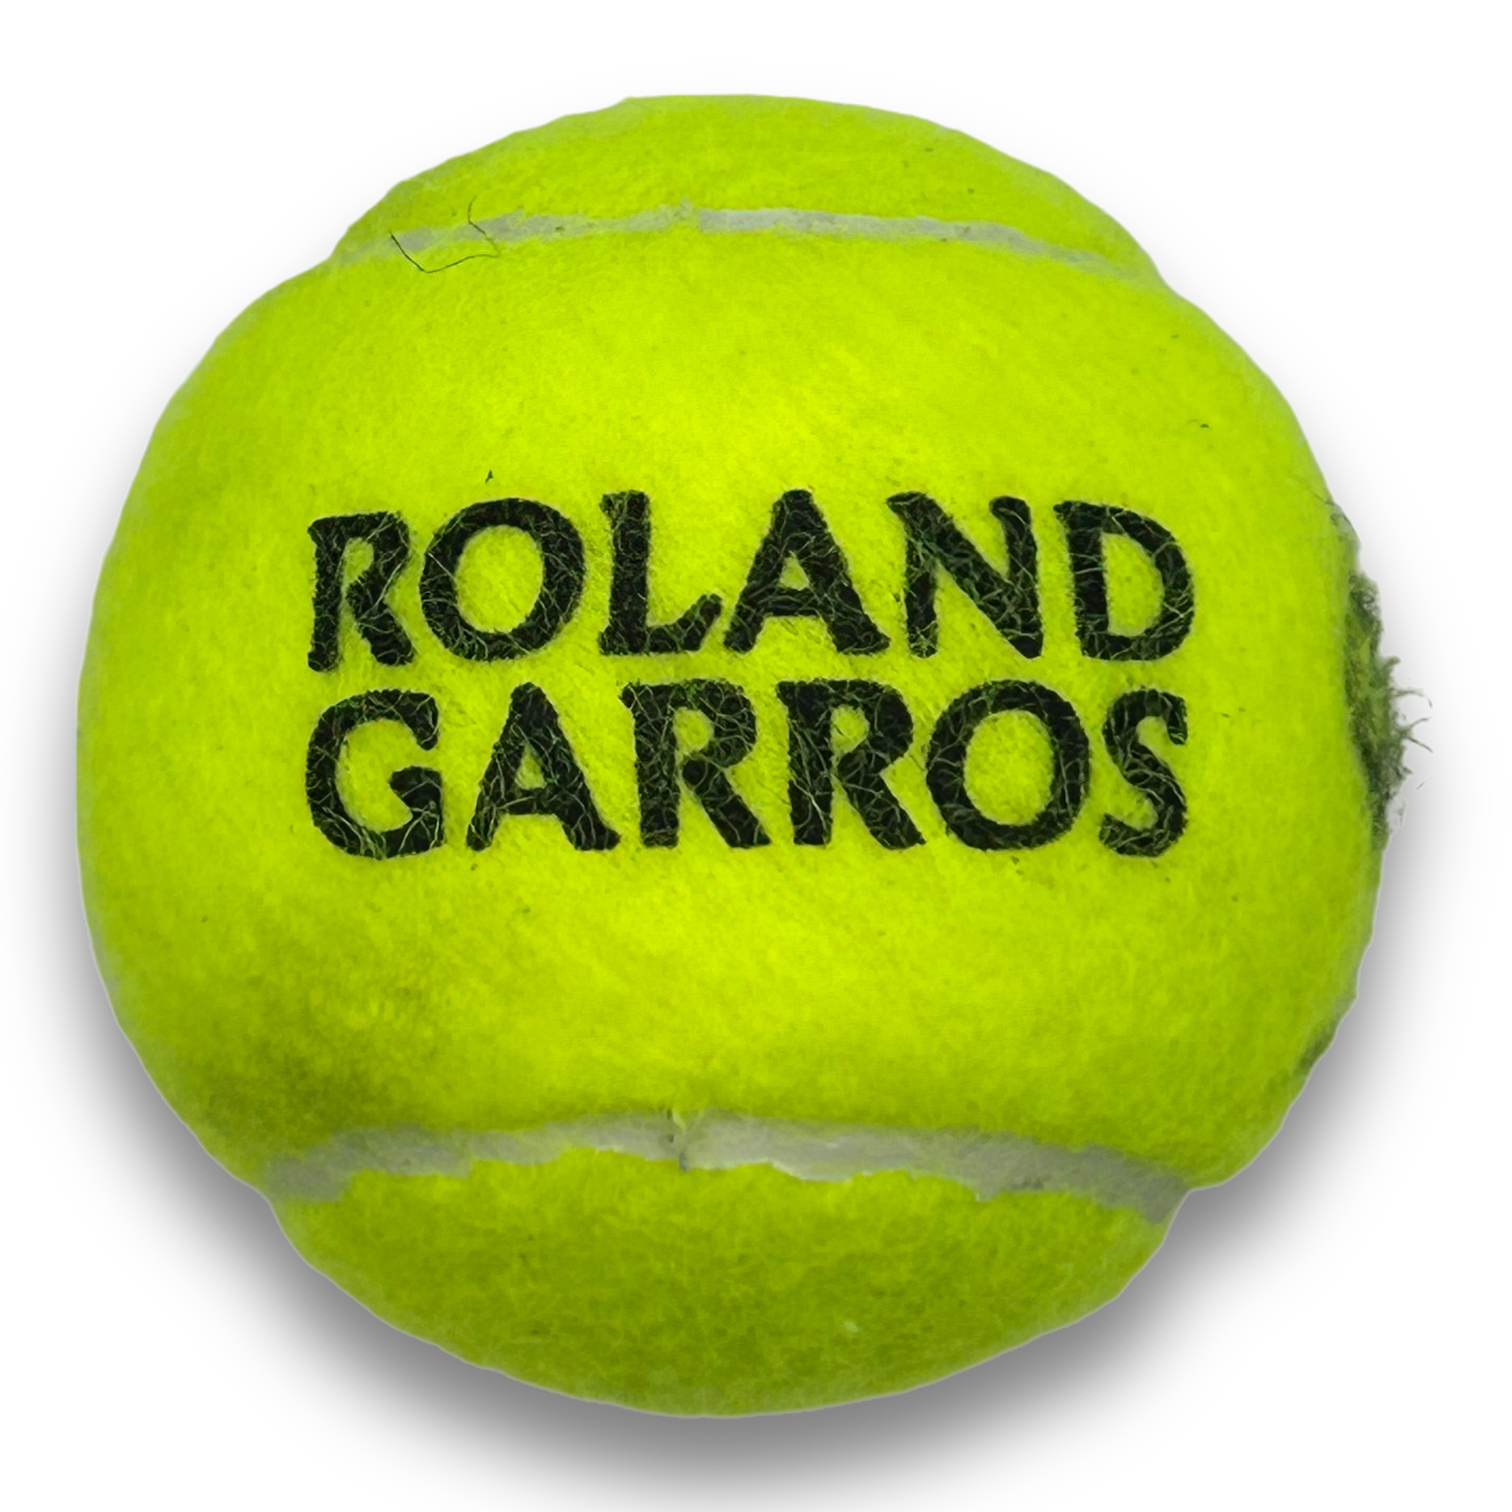 ONS JABEUR SIGNED WILSON 3 ROLAND GARROS TENNIS BALL (AFTAL COA)